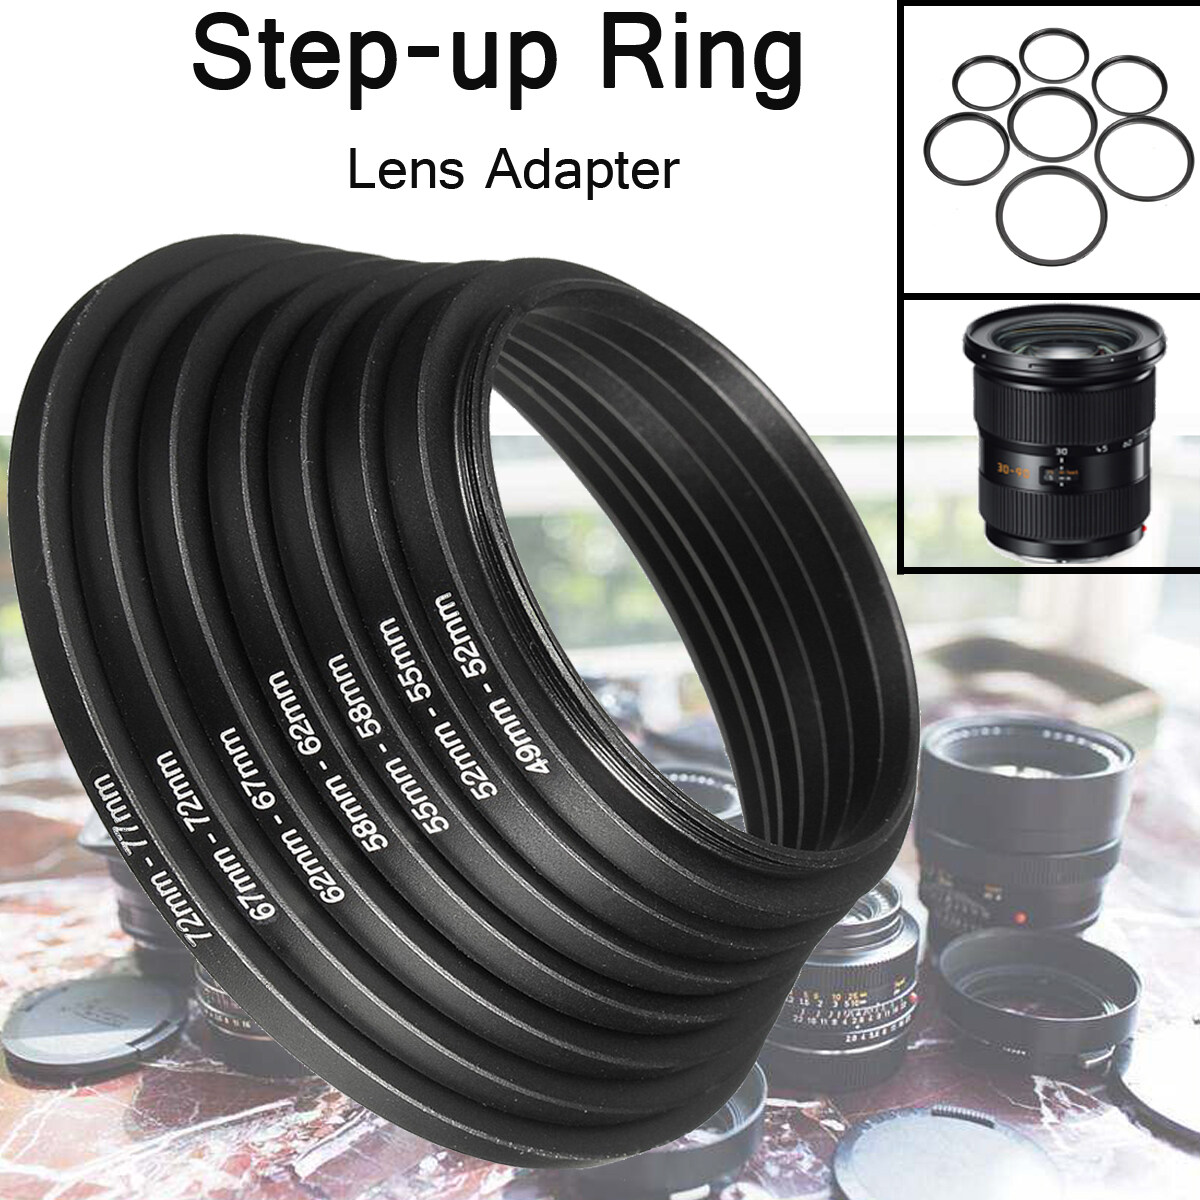 9pcs Metal Step Up Rings Aluminum Universal Lens Adapter Filter Set 37-49-52-55-58-62-67-72-77-82 mm 37mm-82mm for Camera Lens Adapter Filter Set...